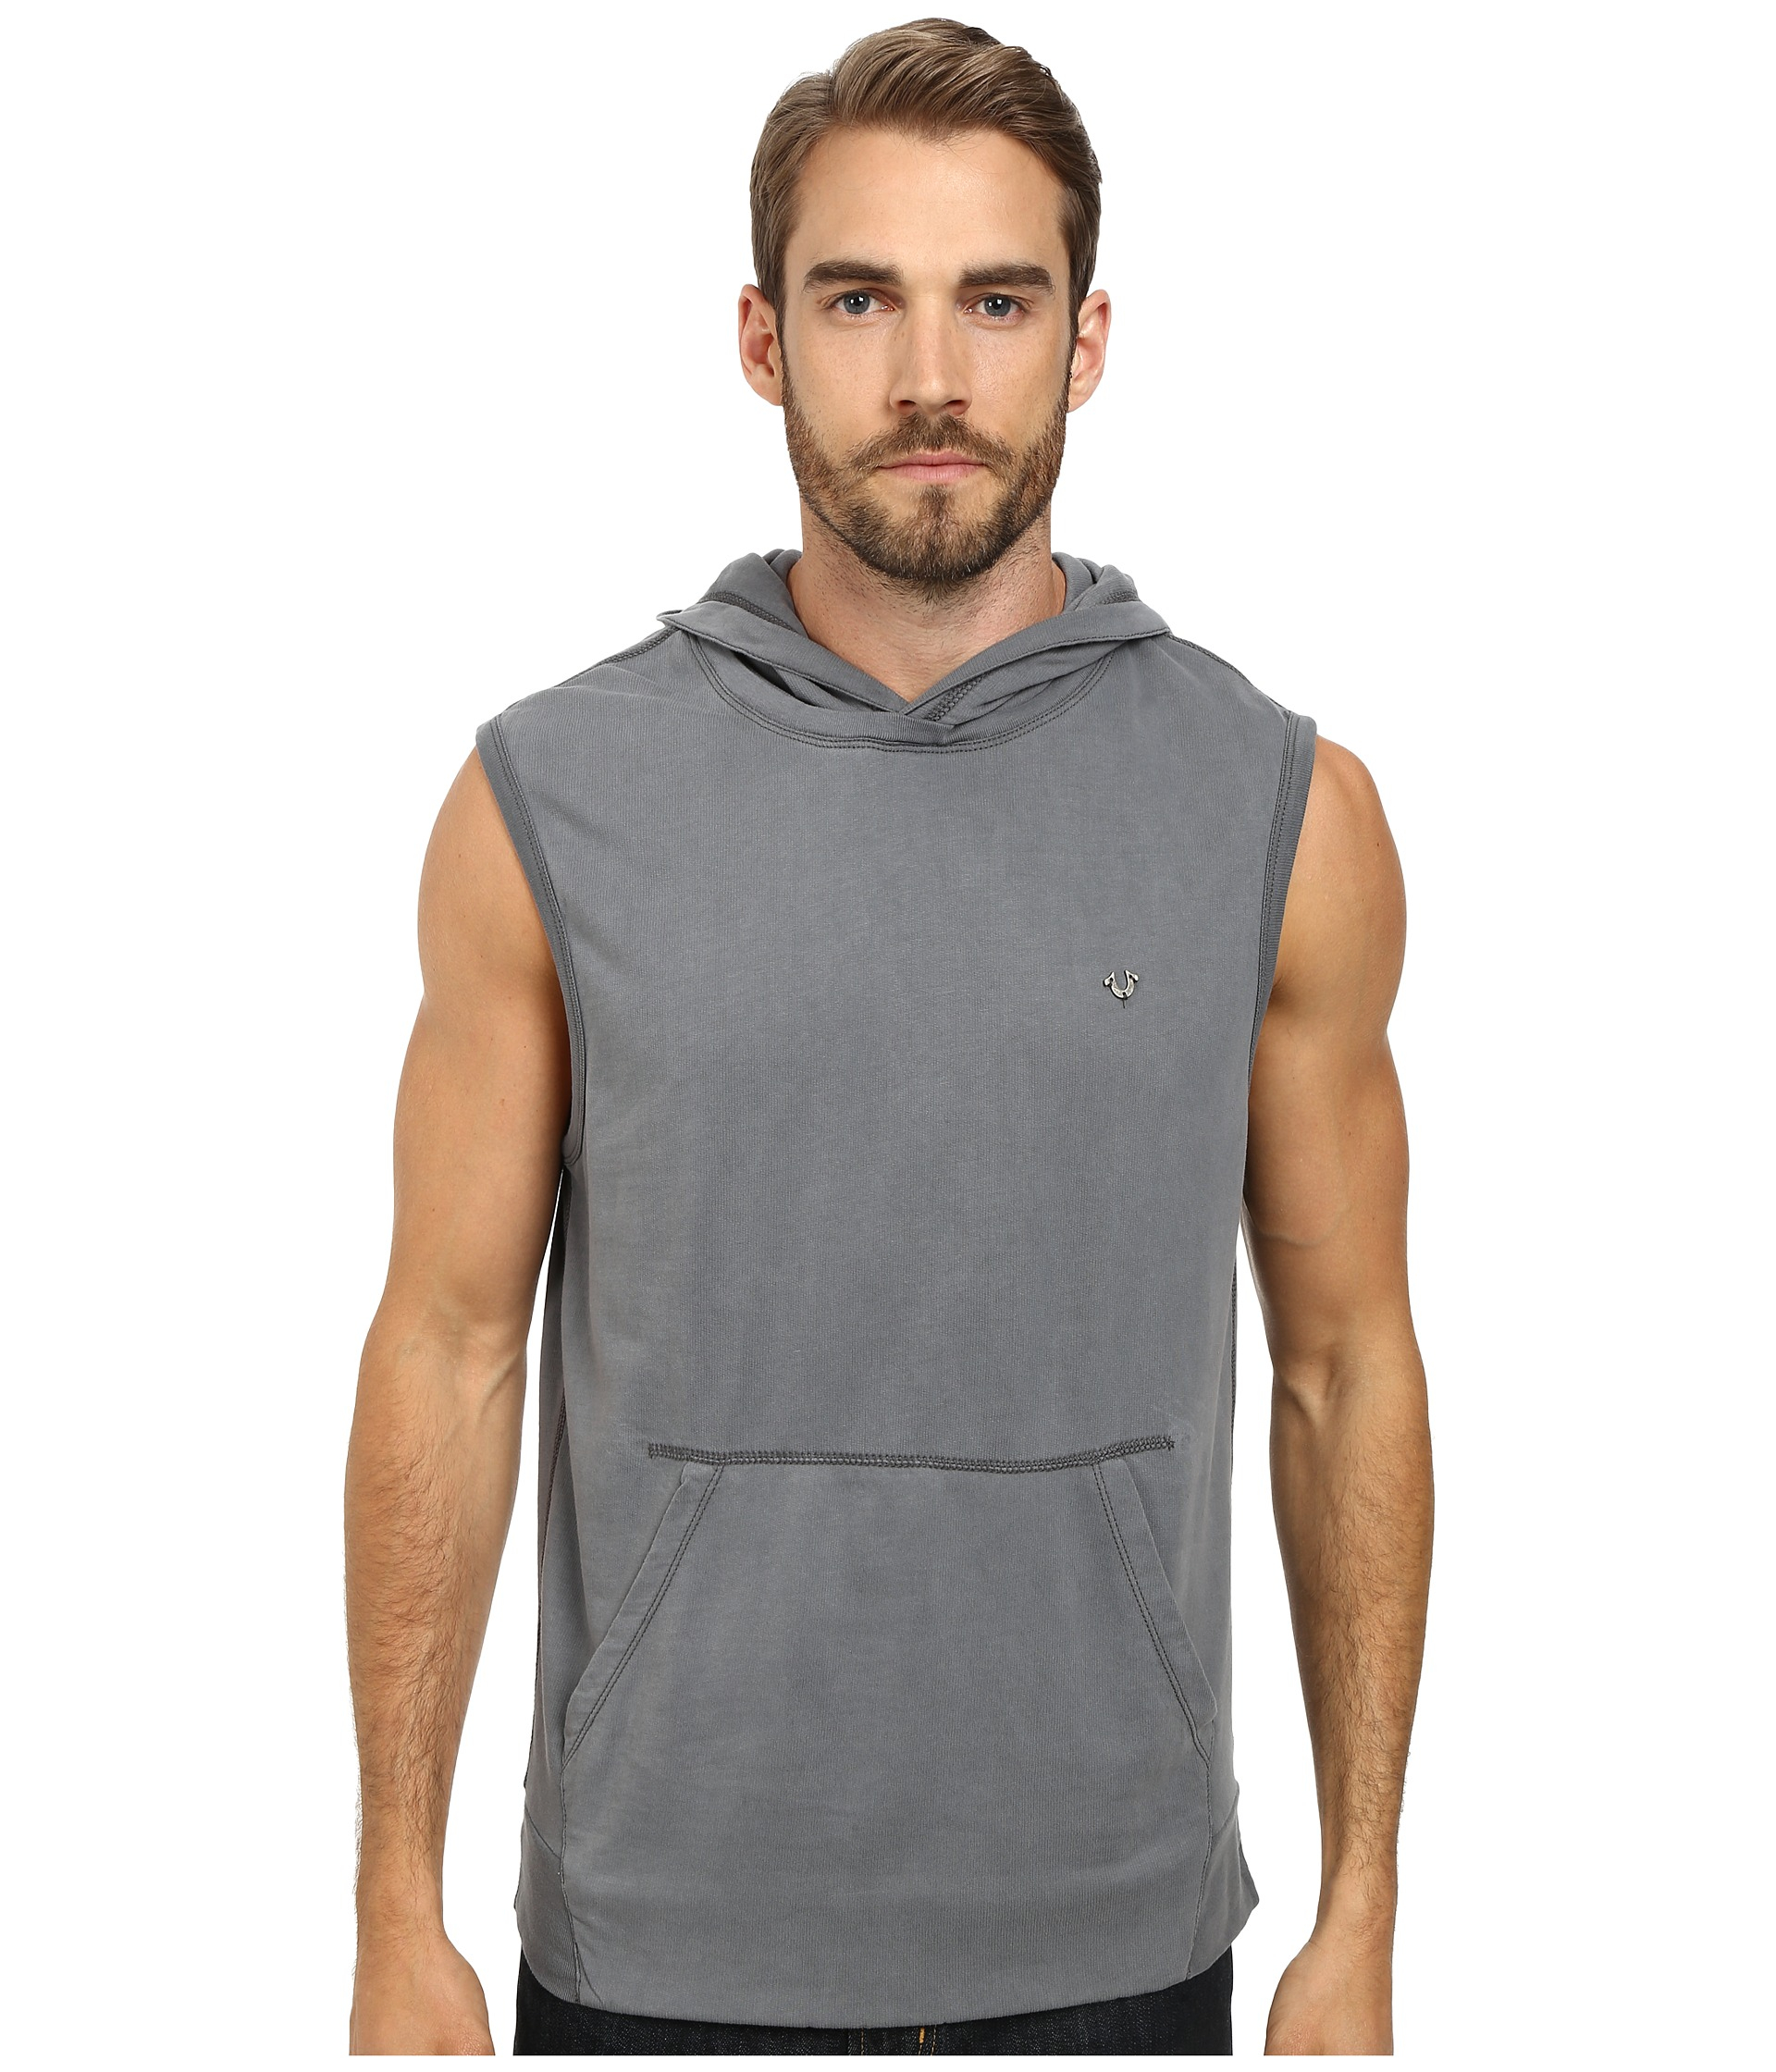 true religion sleeveless hoodie